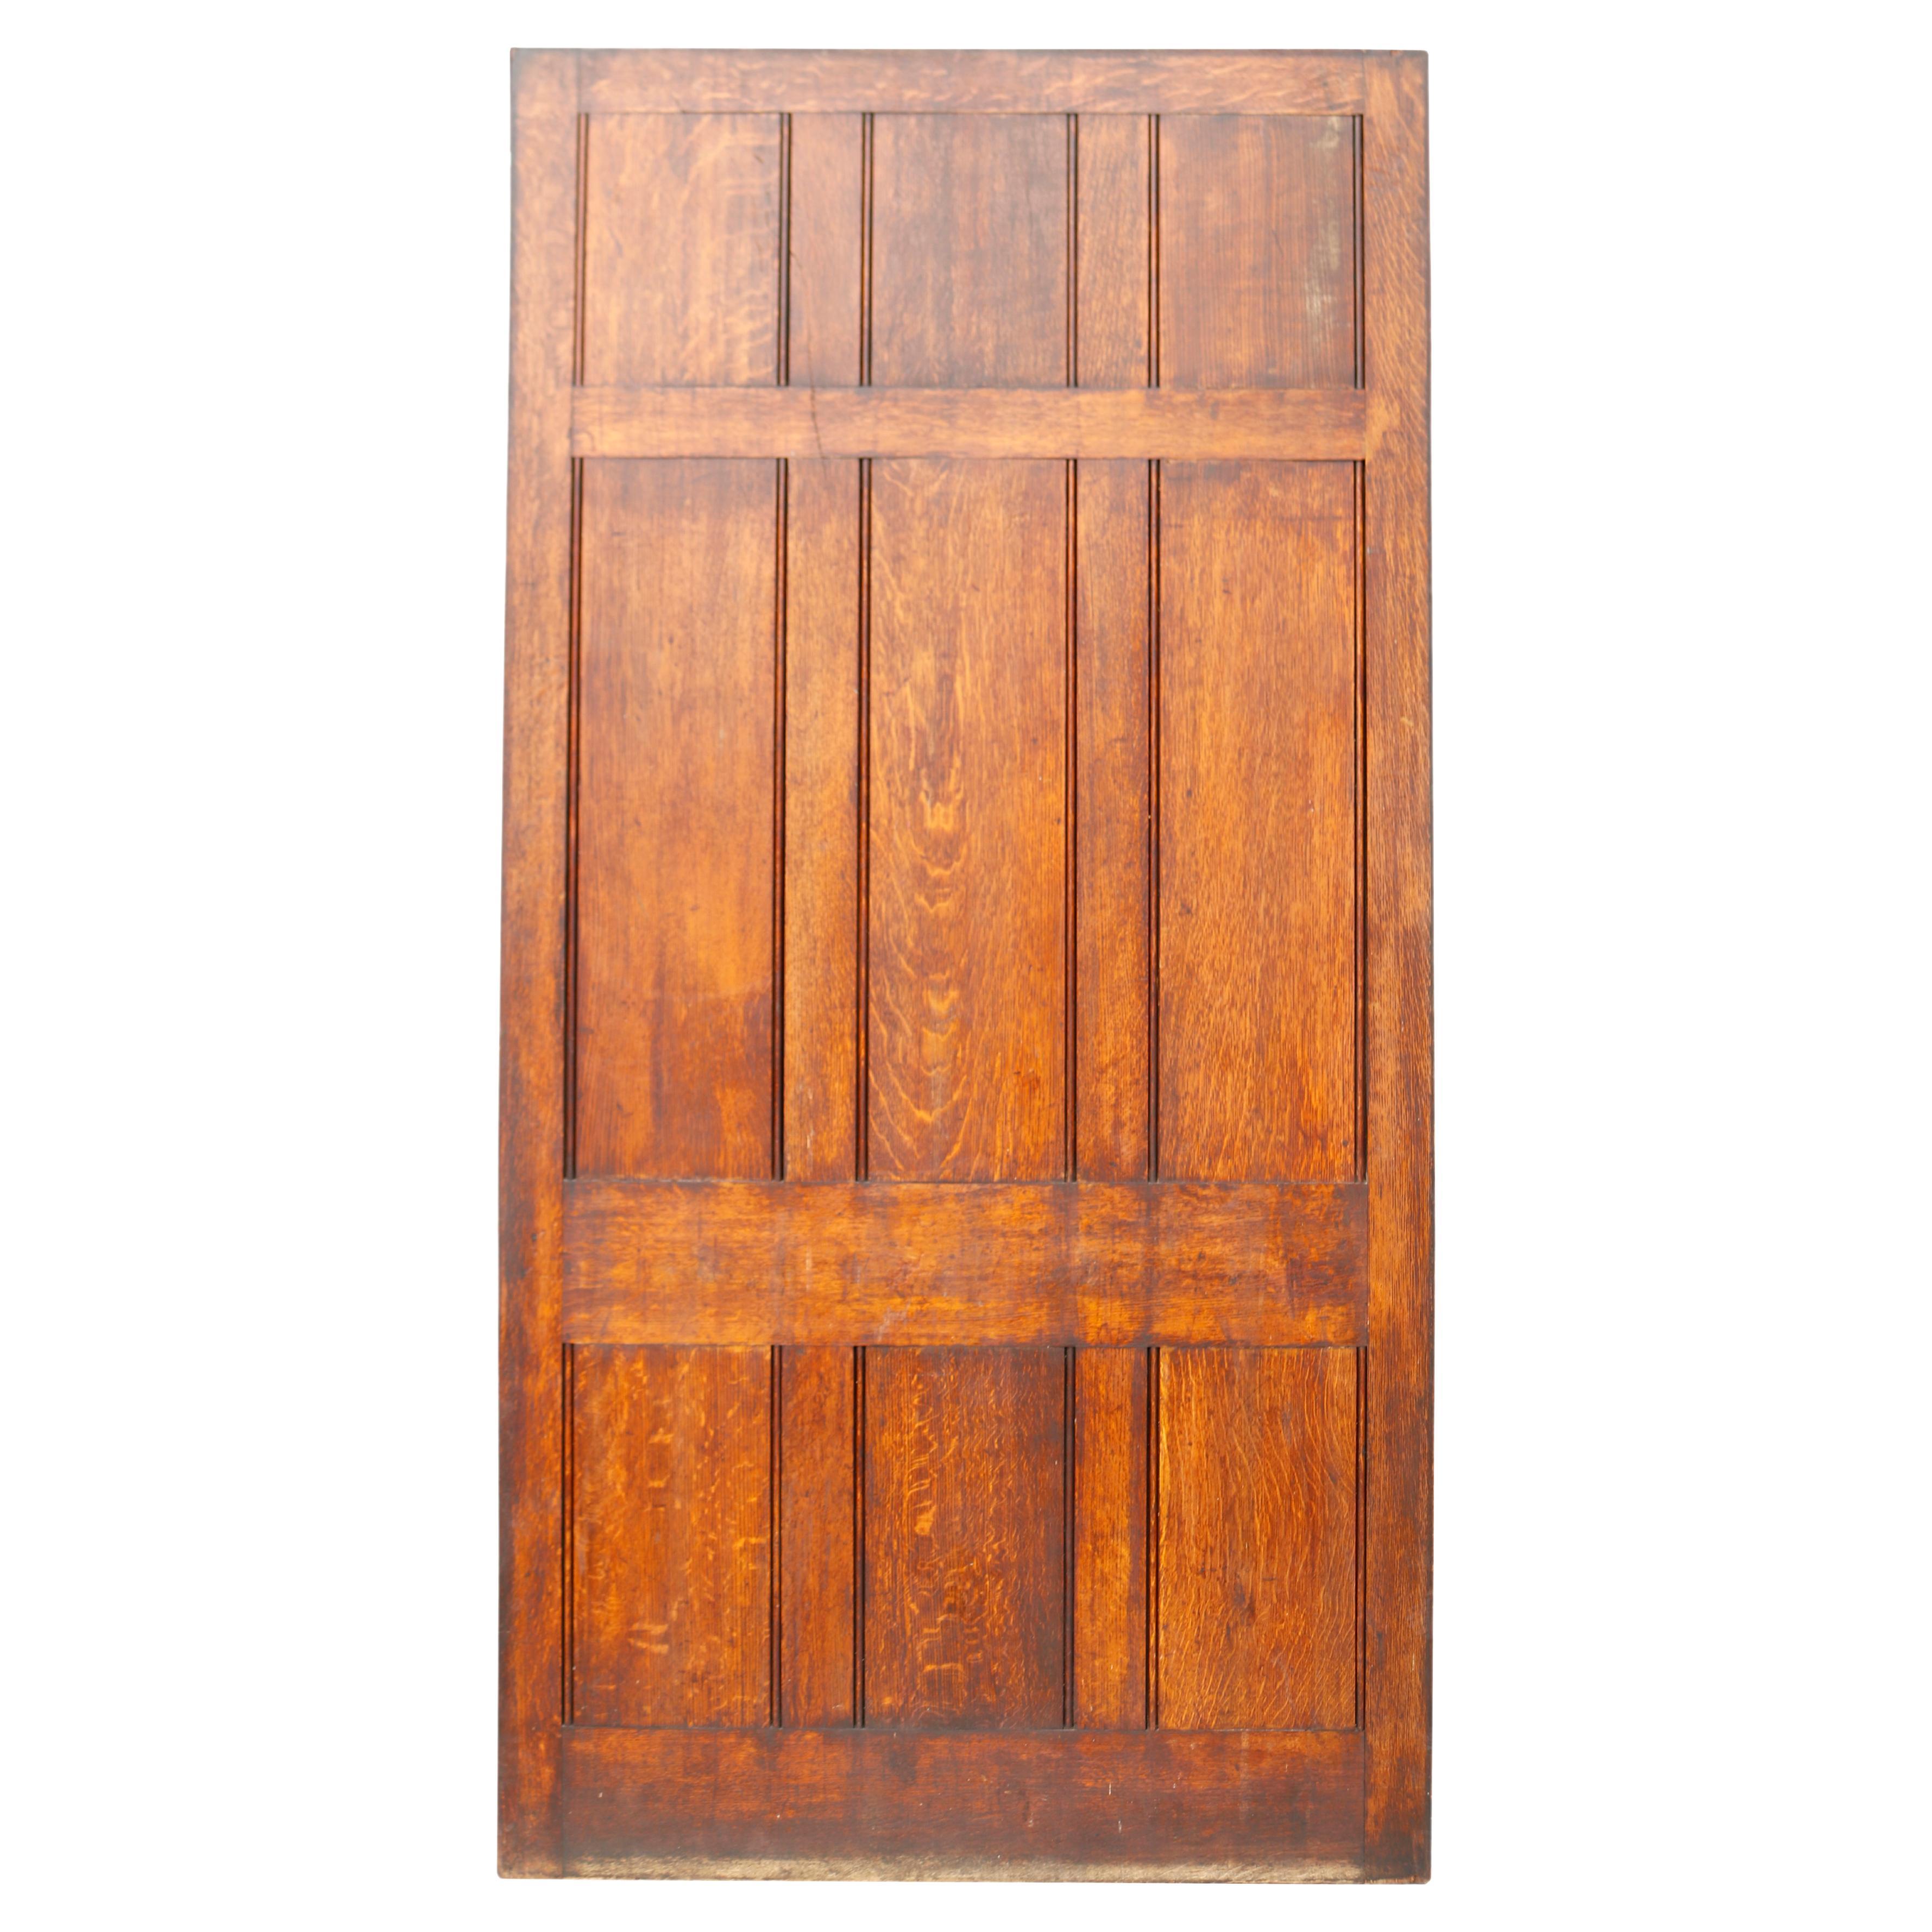 Large Scale Solid Oak Doors